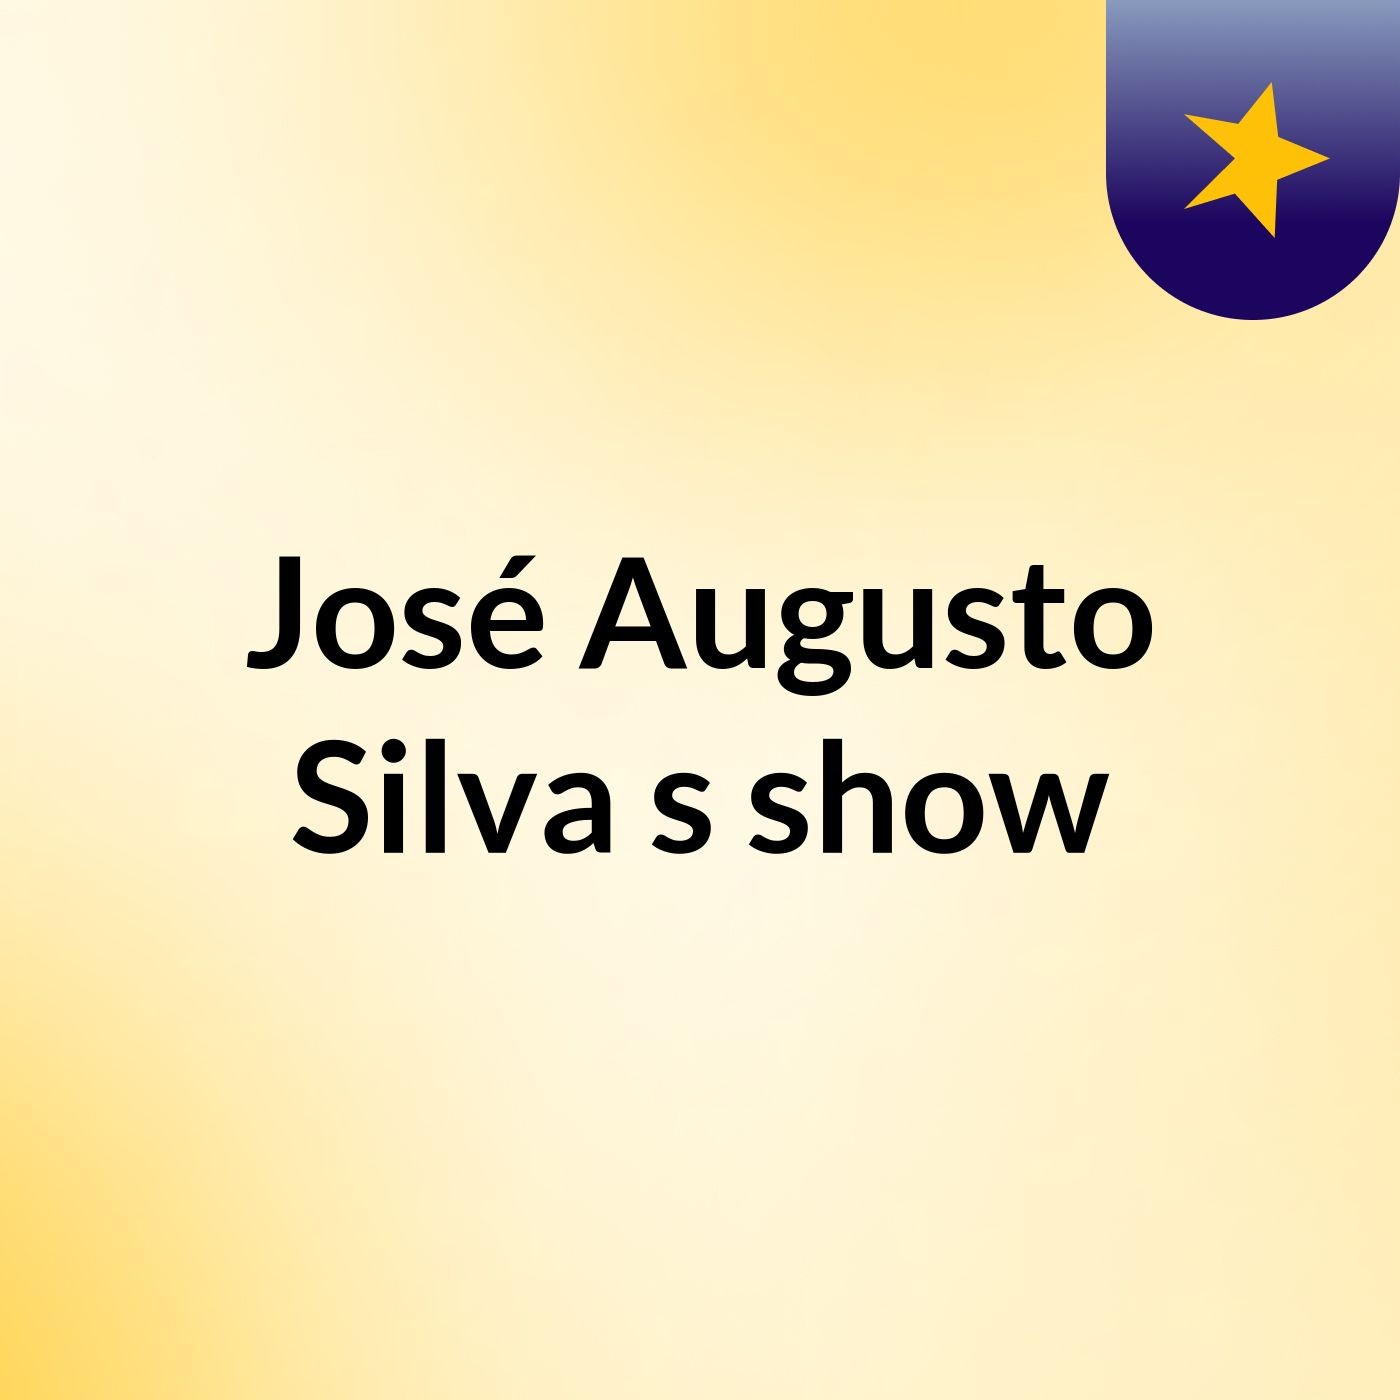 José Augusto Silva's show